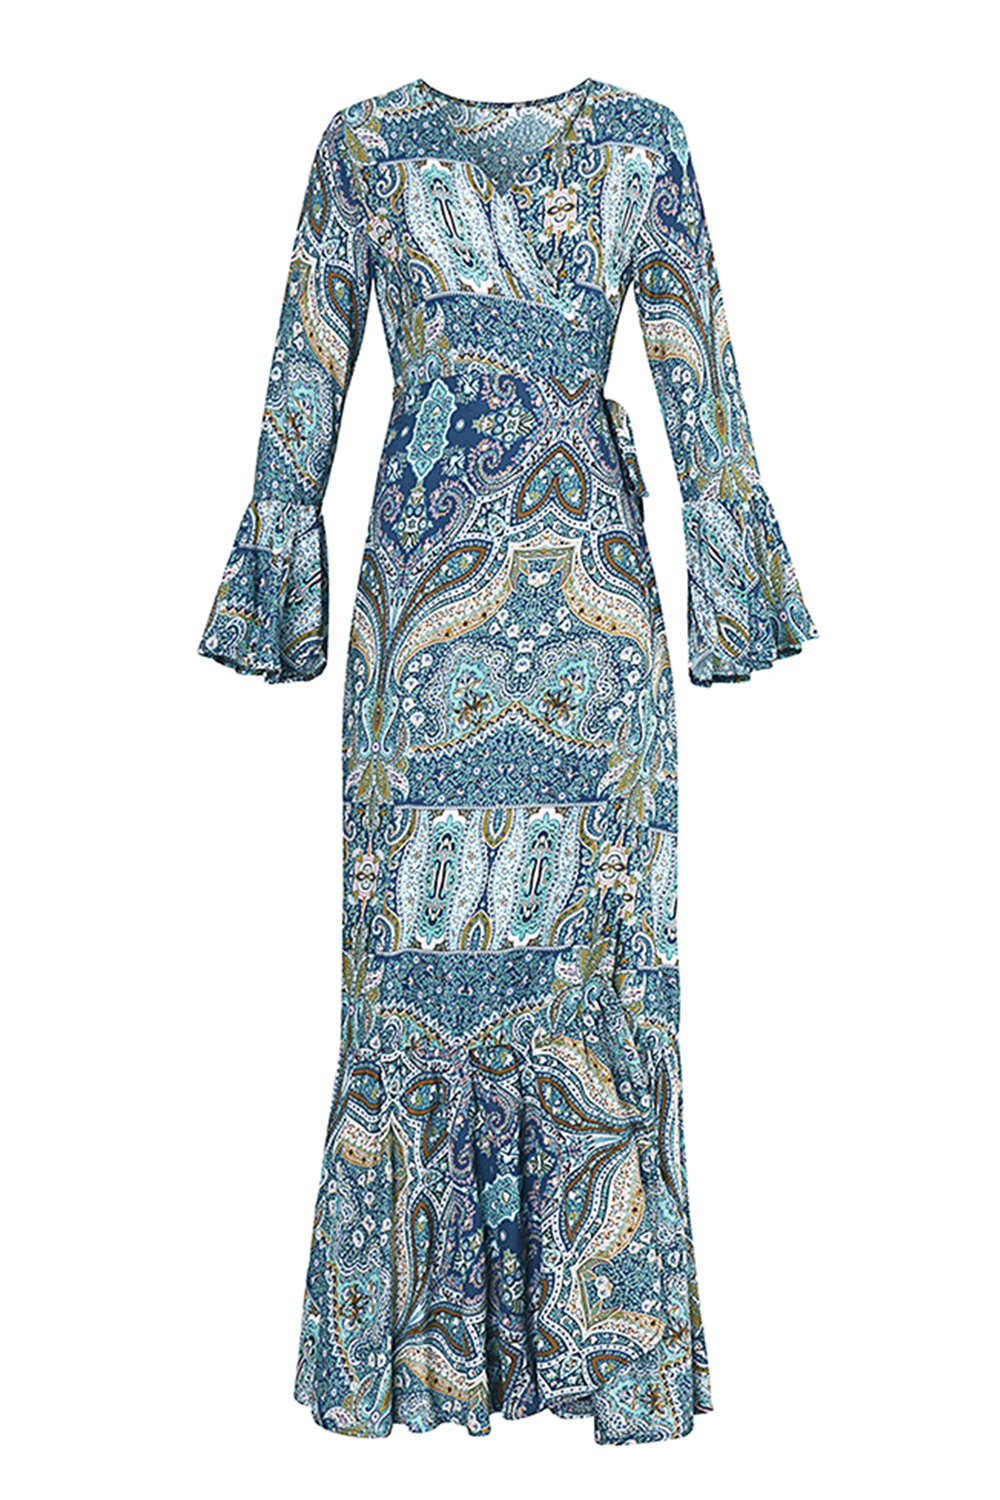 Iyasson Bohemia Print Ruffle-Hem Maxi Dress